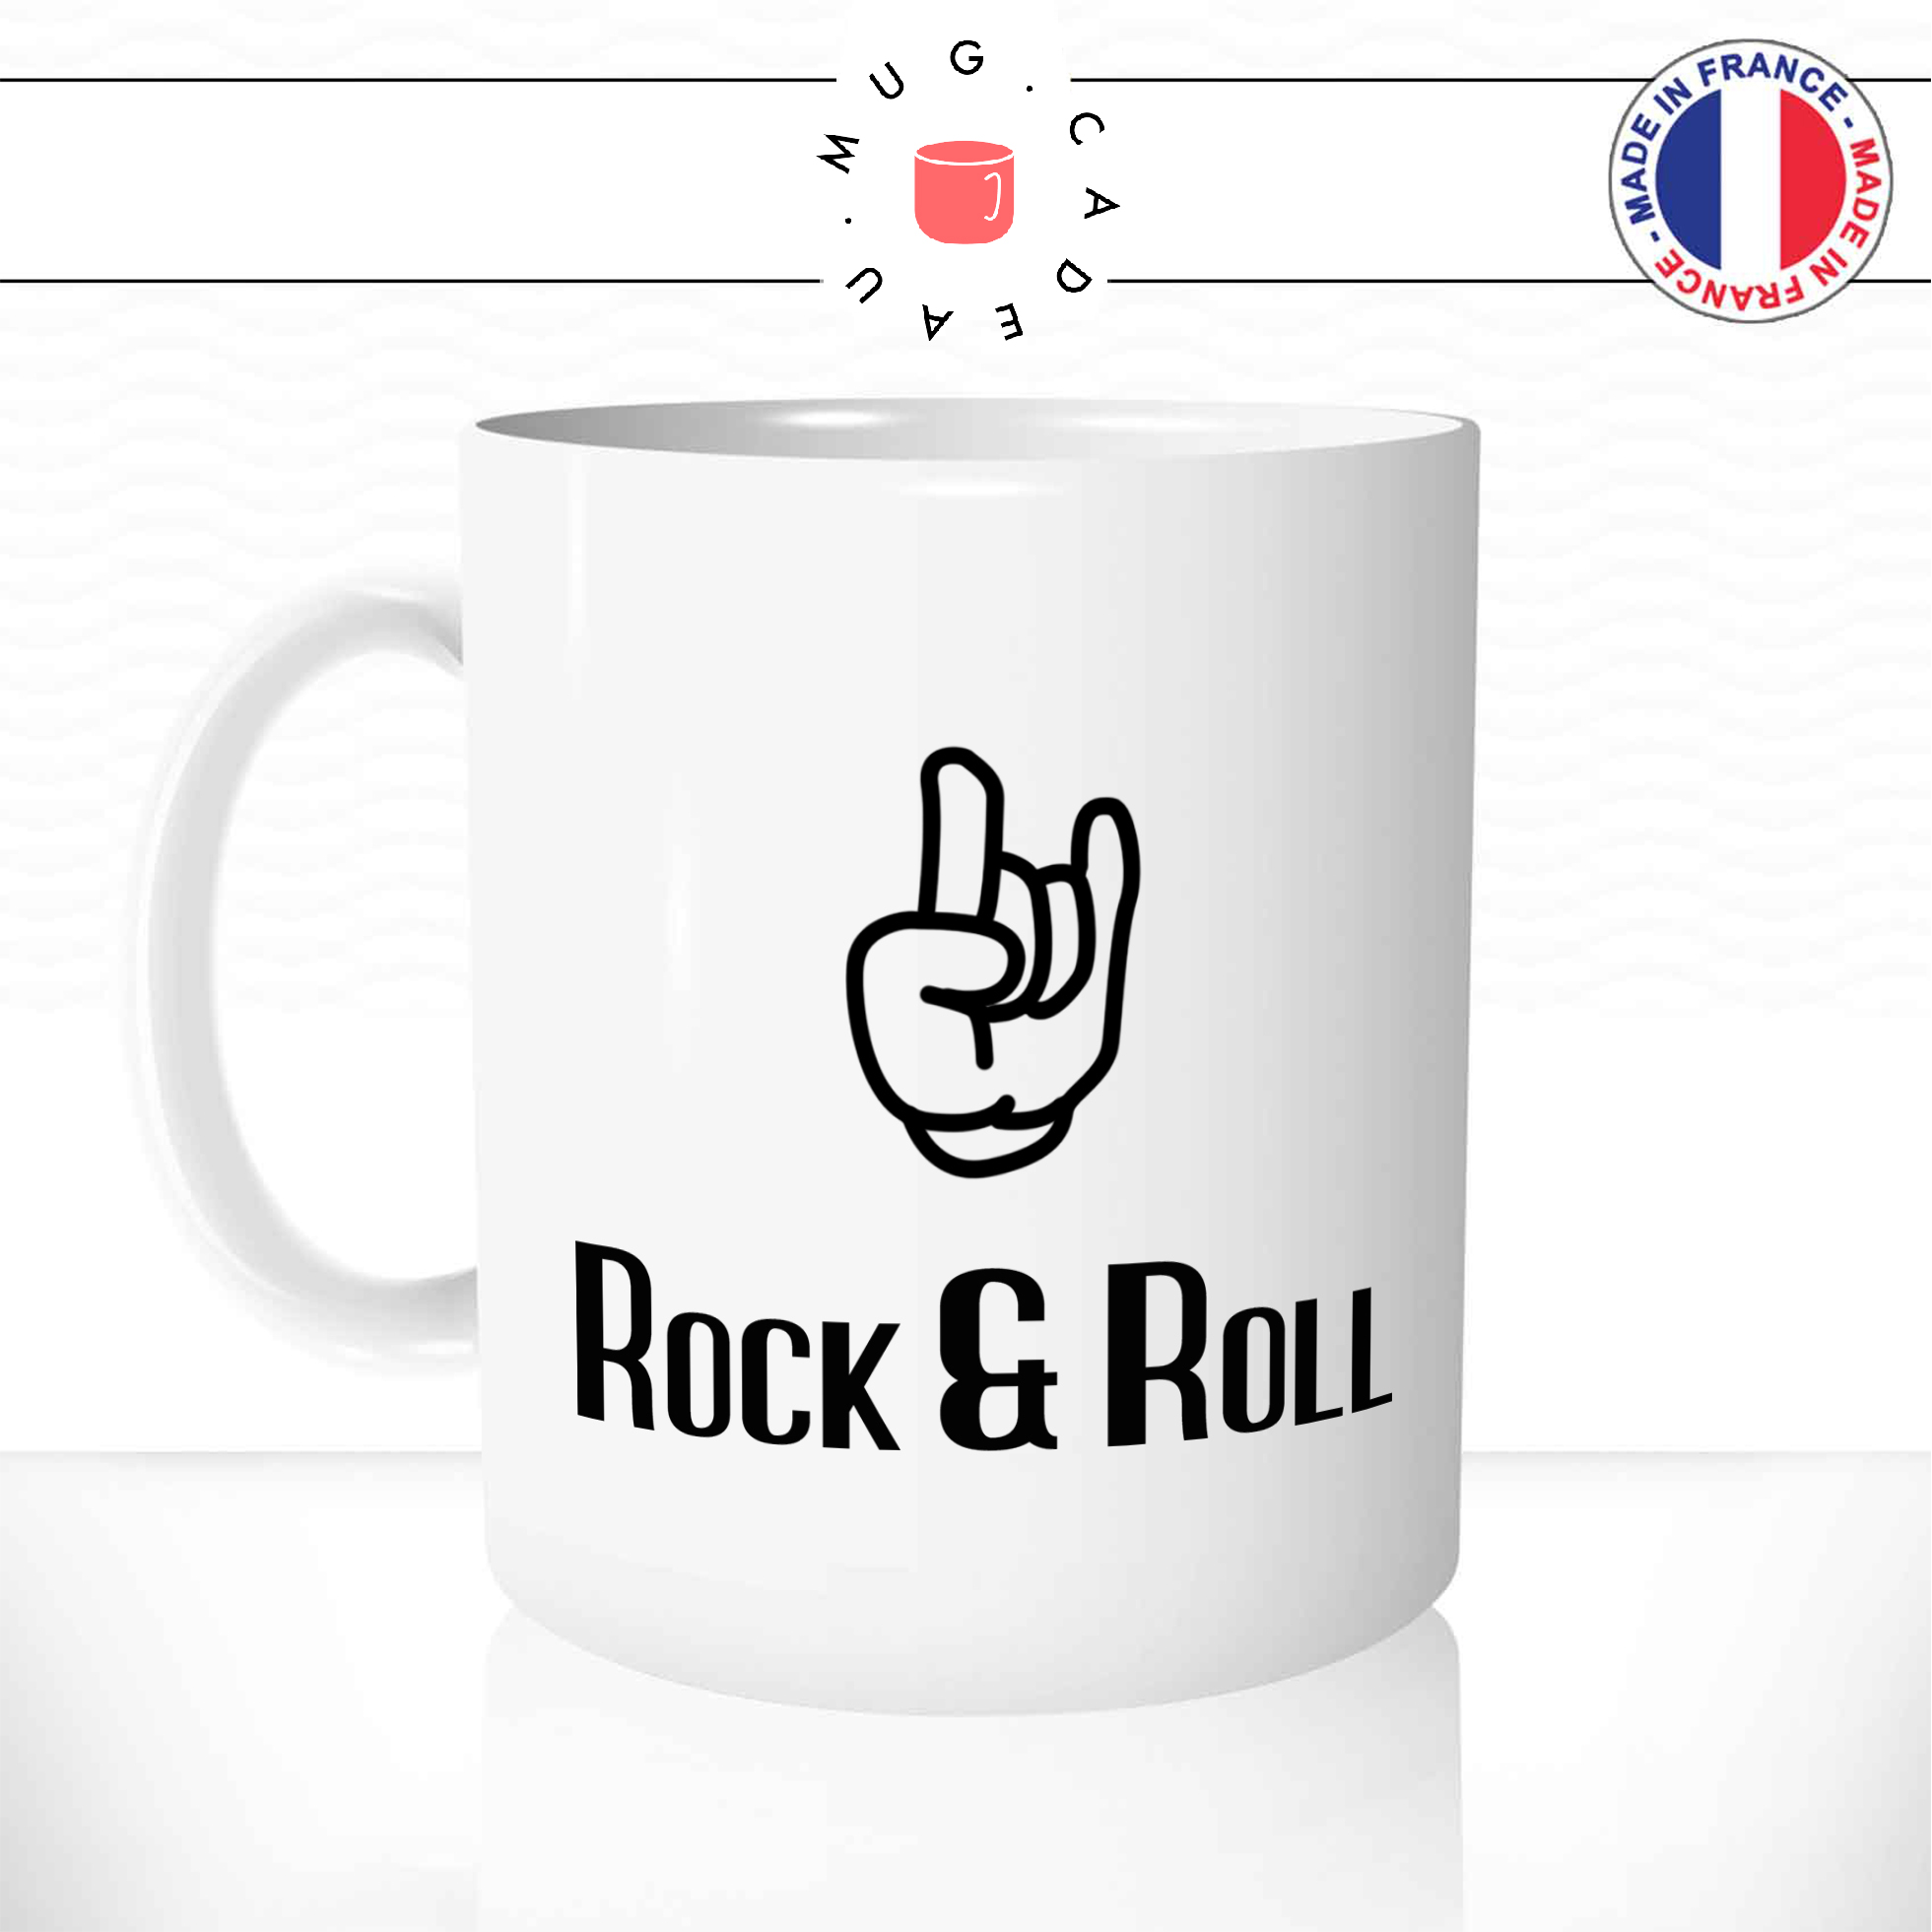 Mug Rock & Roll